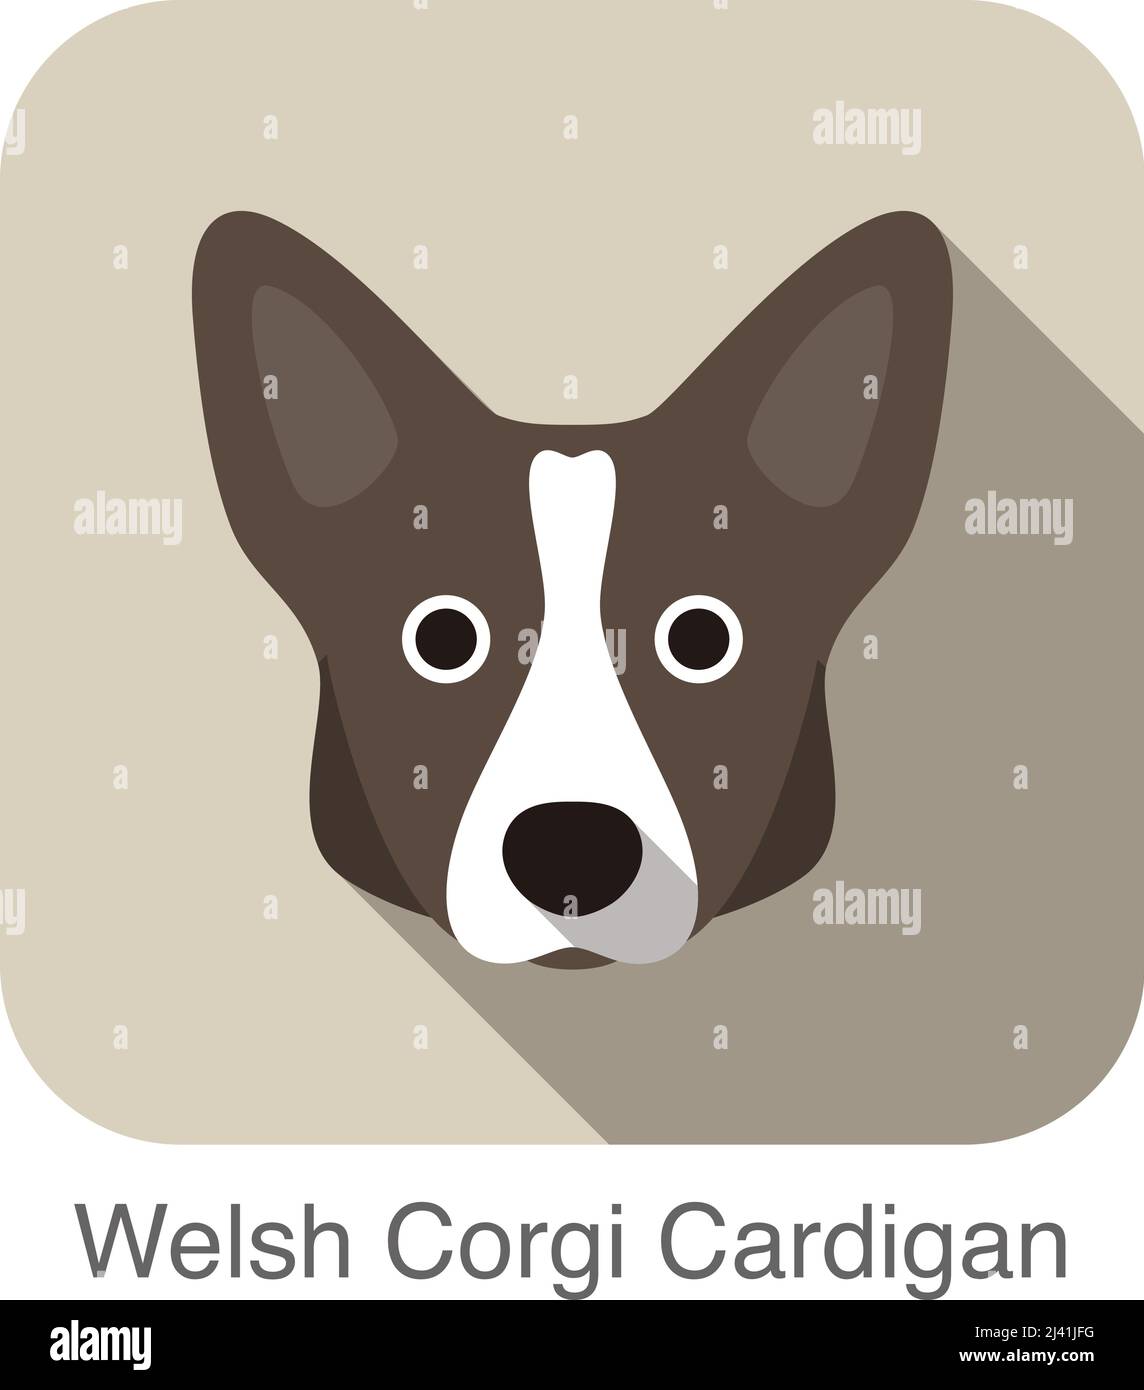 Welsh Corgi Cardigan dog character, dog breed series Stock Vector